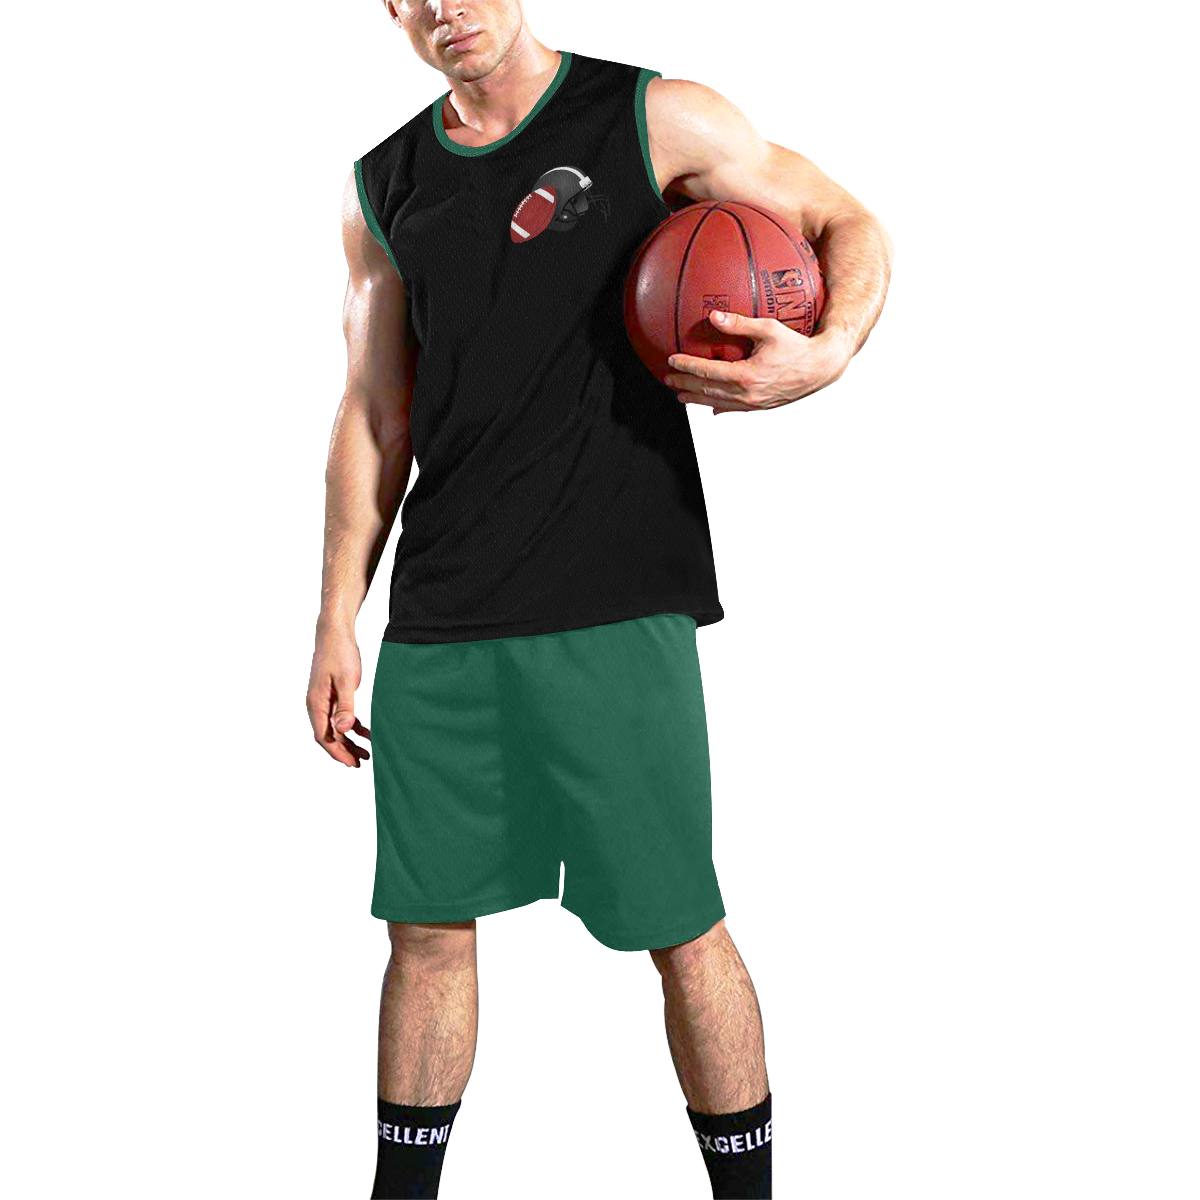 Football and Football Helmet Sports Green and Black All Over Print Basketball Uniform